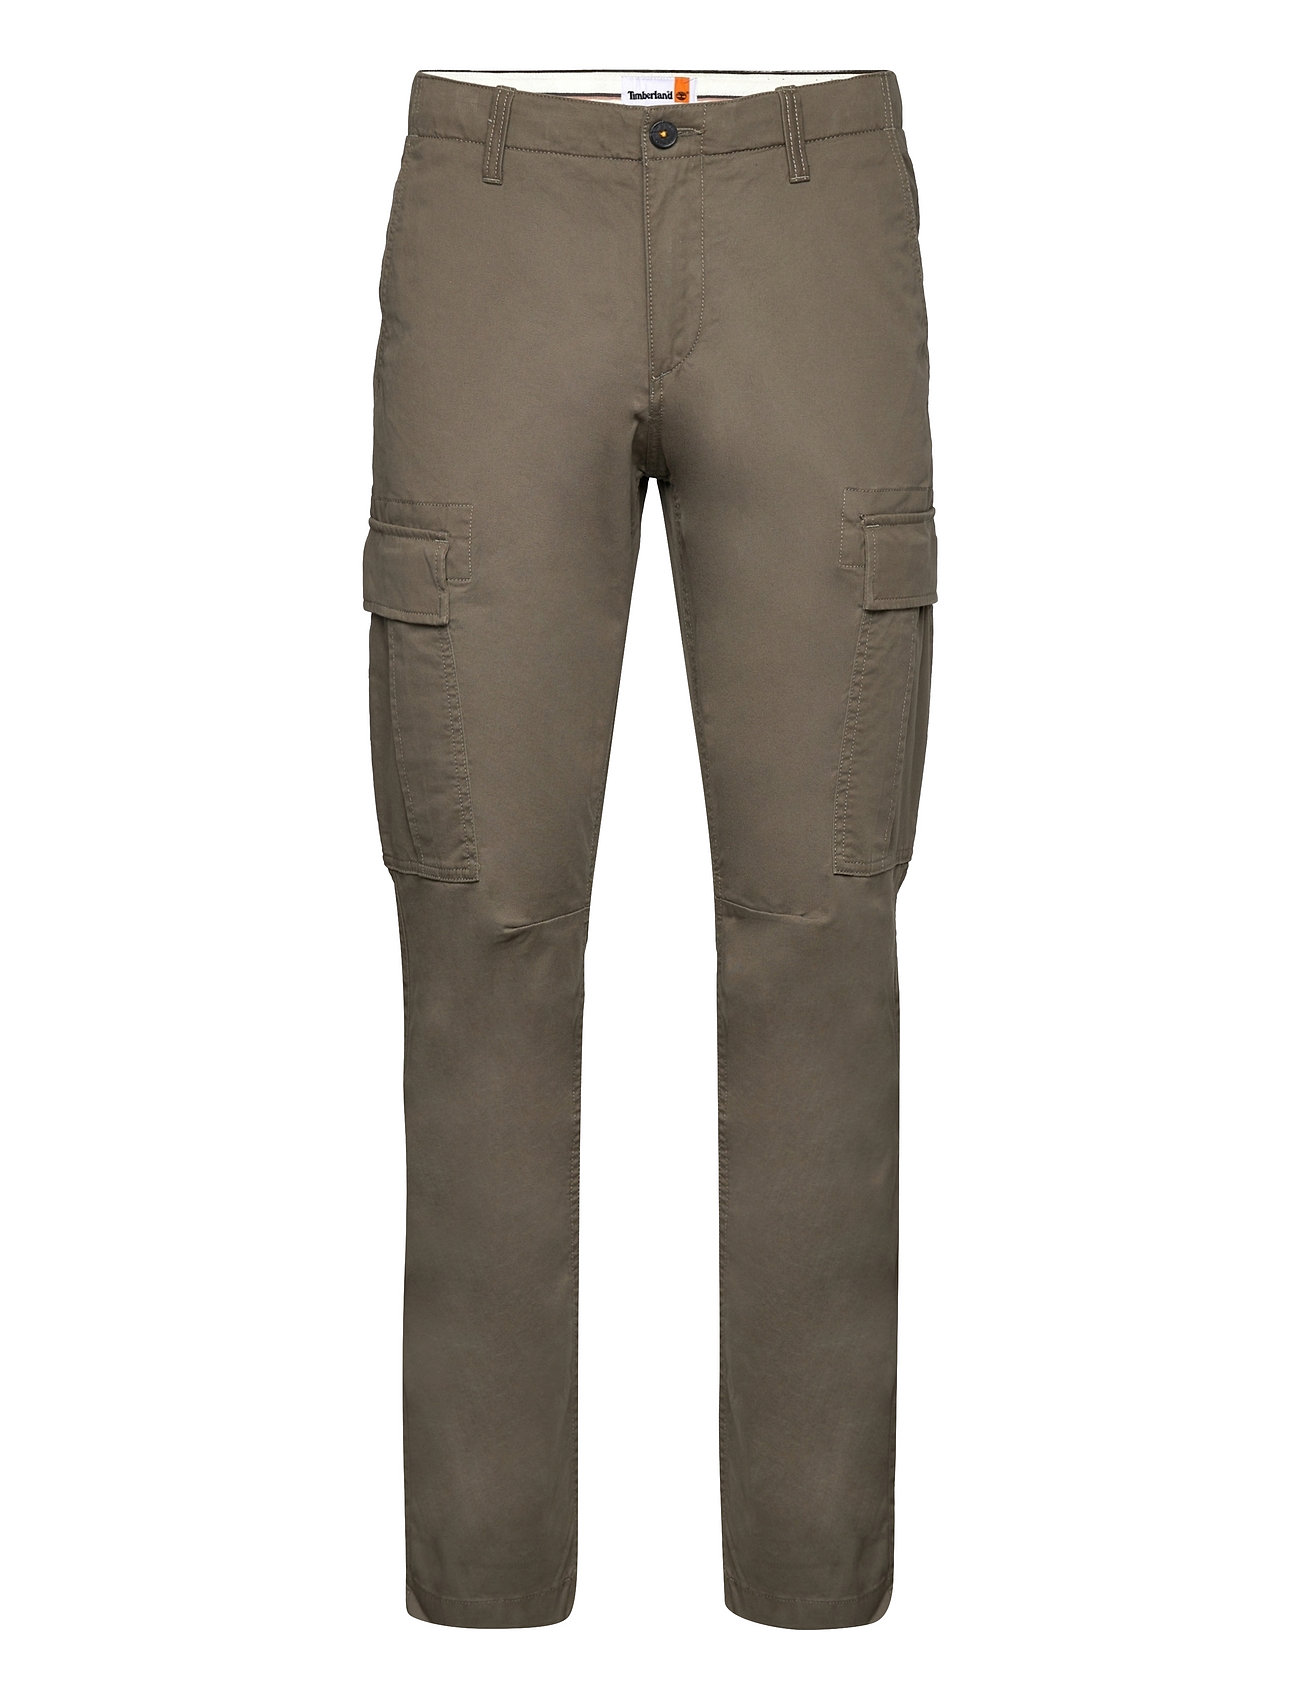 Timberland Cargo Pants for Men | Mercari